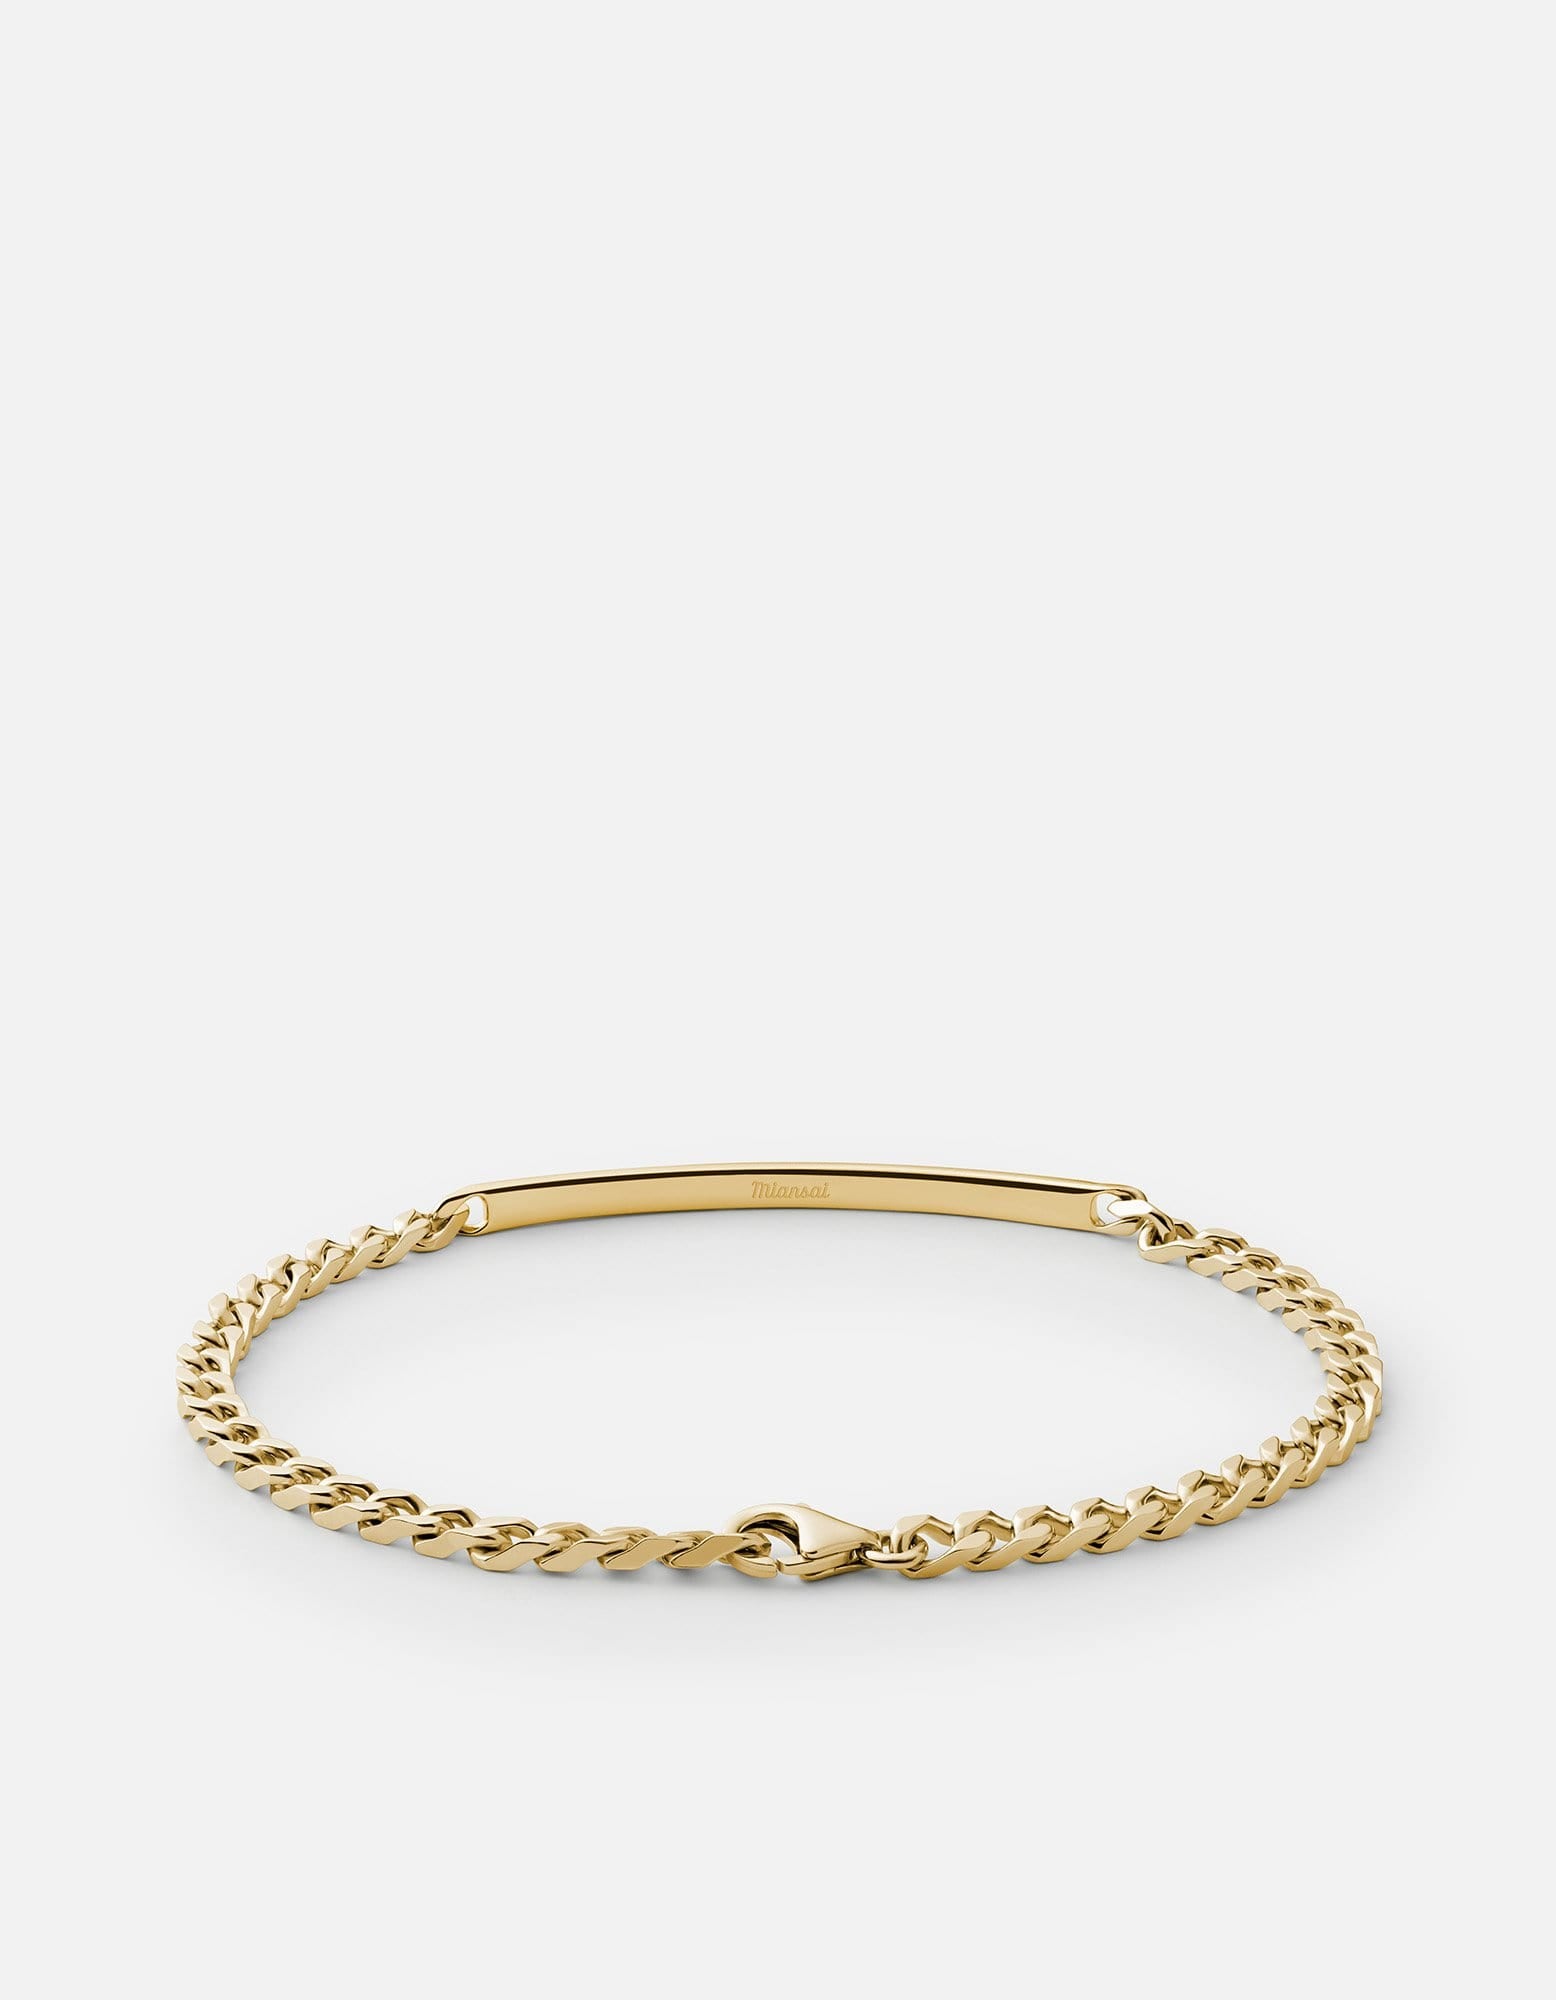 ID Chain Bracelet, Gold Vermeil, Men's Bracelets